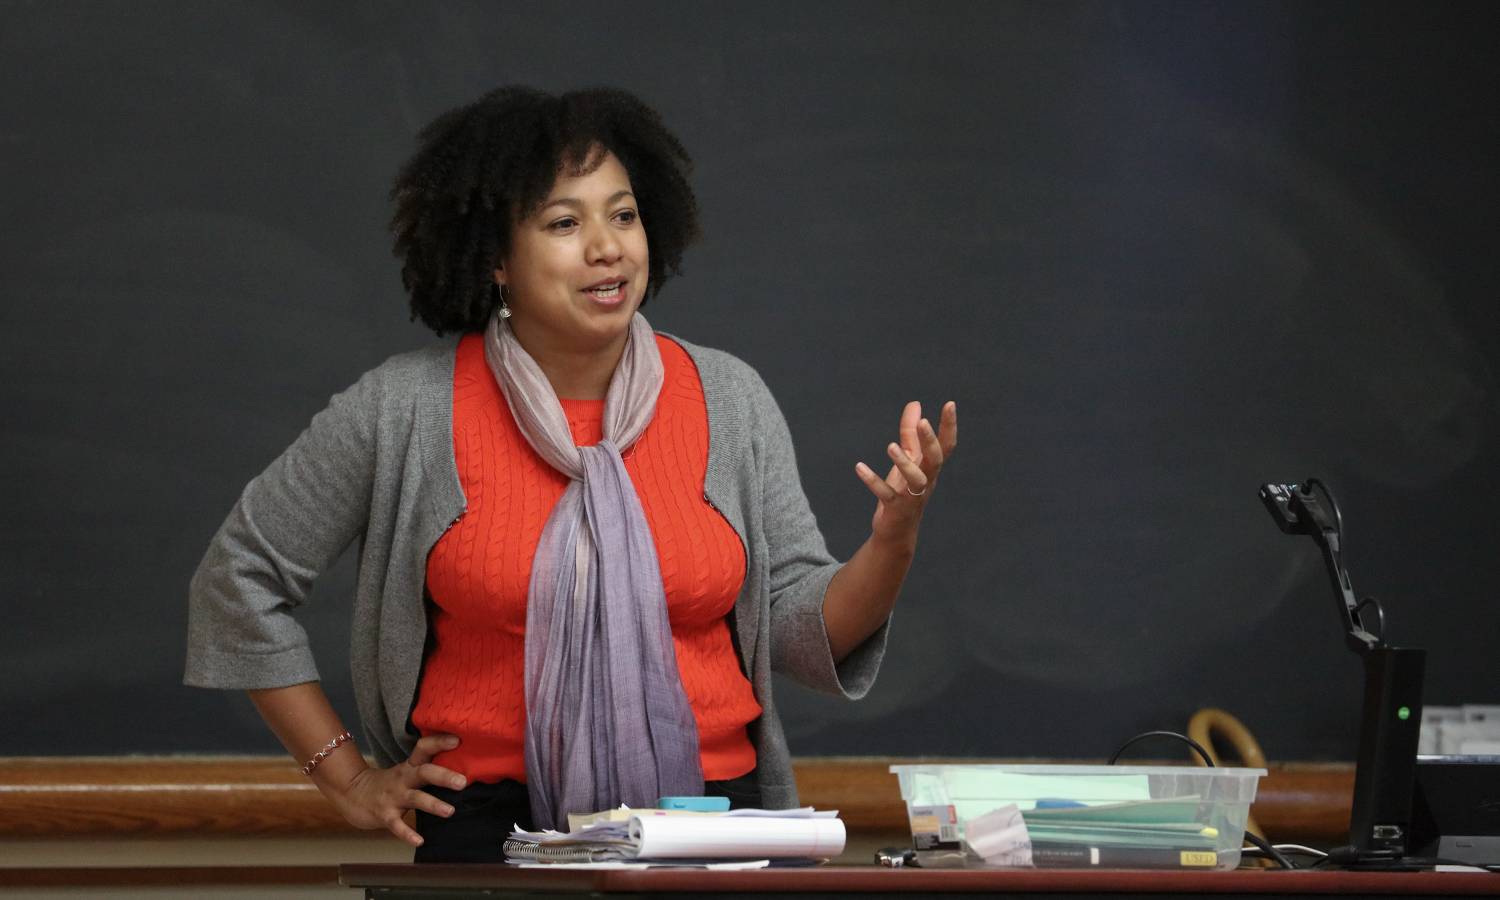 Prof. Nicola Minott-Ahl teaches in front of a blackboard.